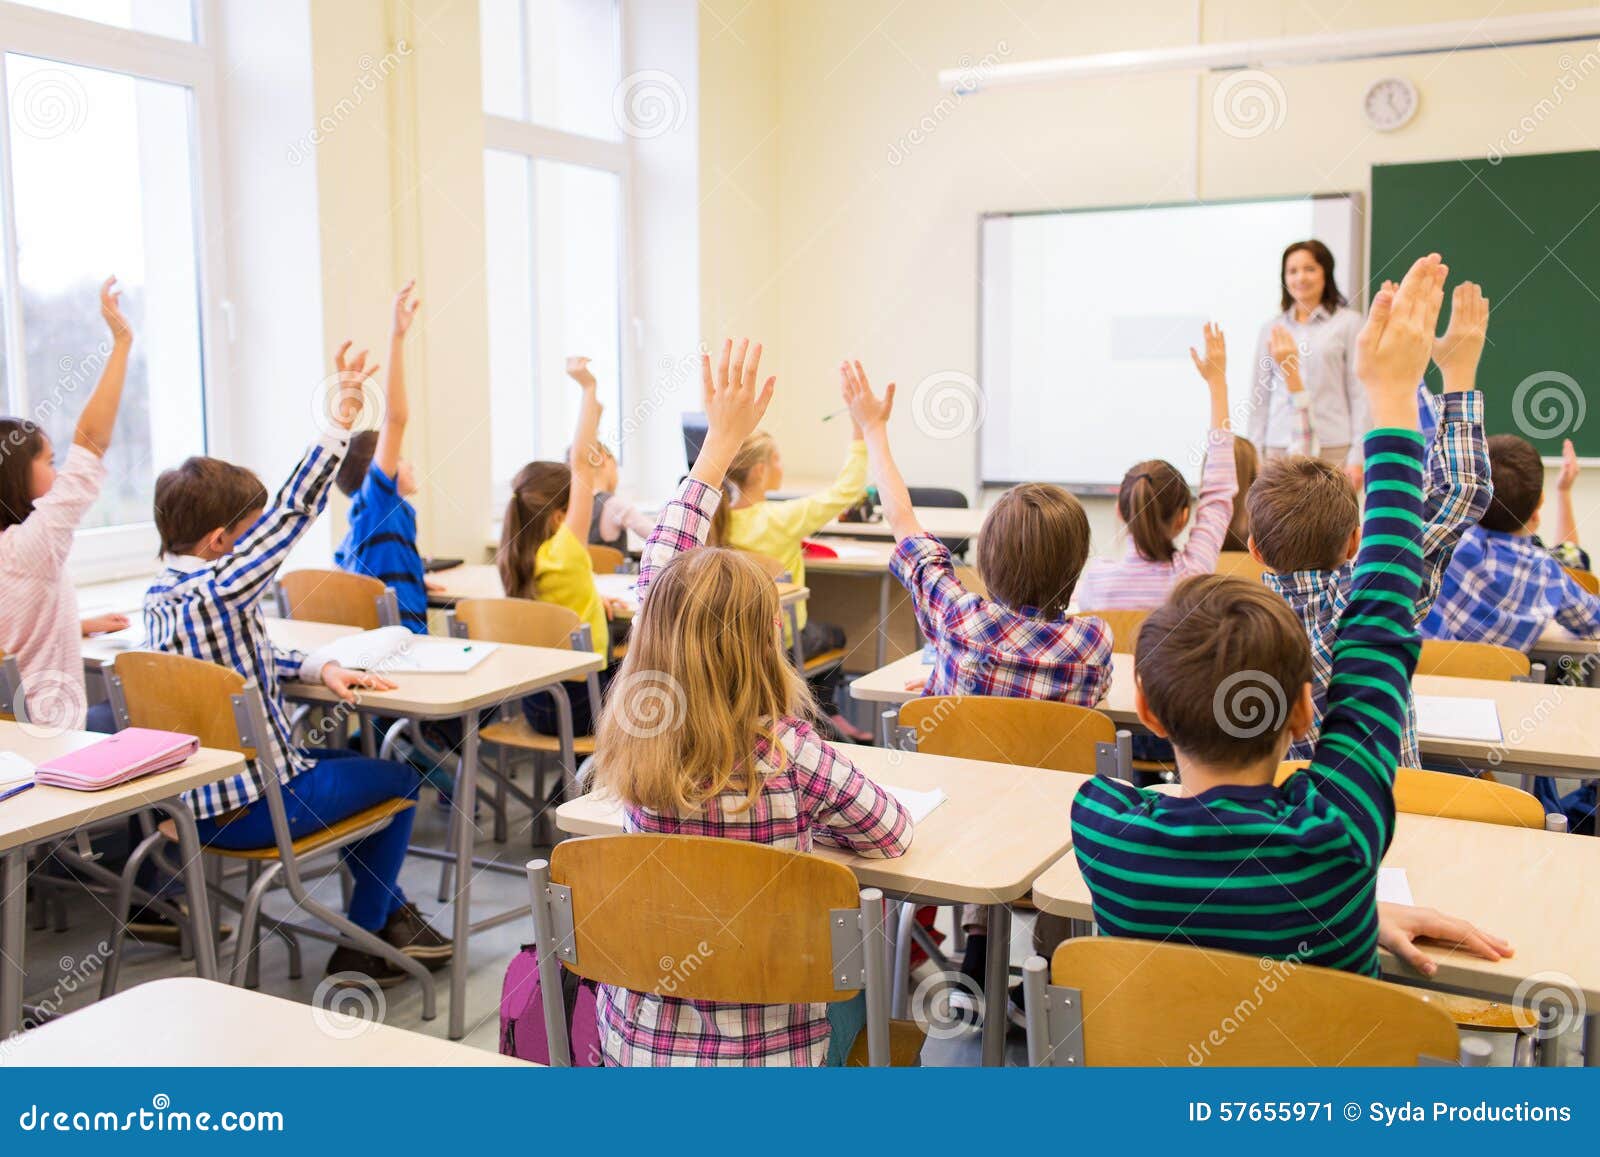 group-school-kids-raising-hands-classroom-education-elementary-learning-people-concept-teacher-sitting-57655971.jpg